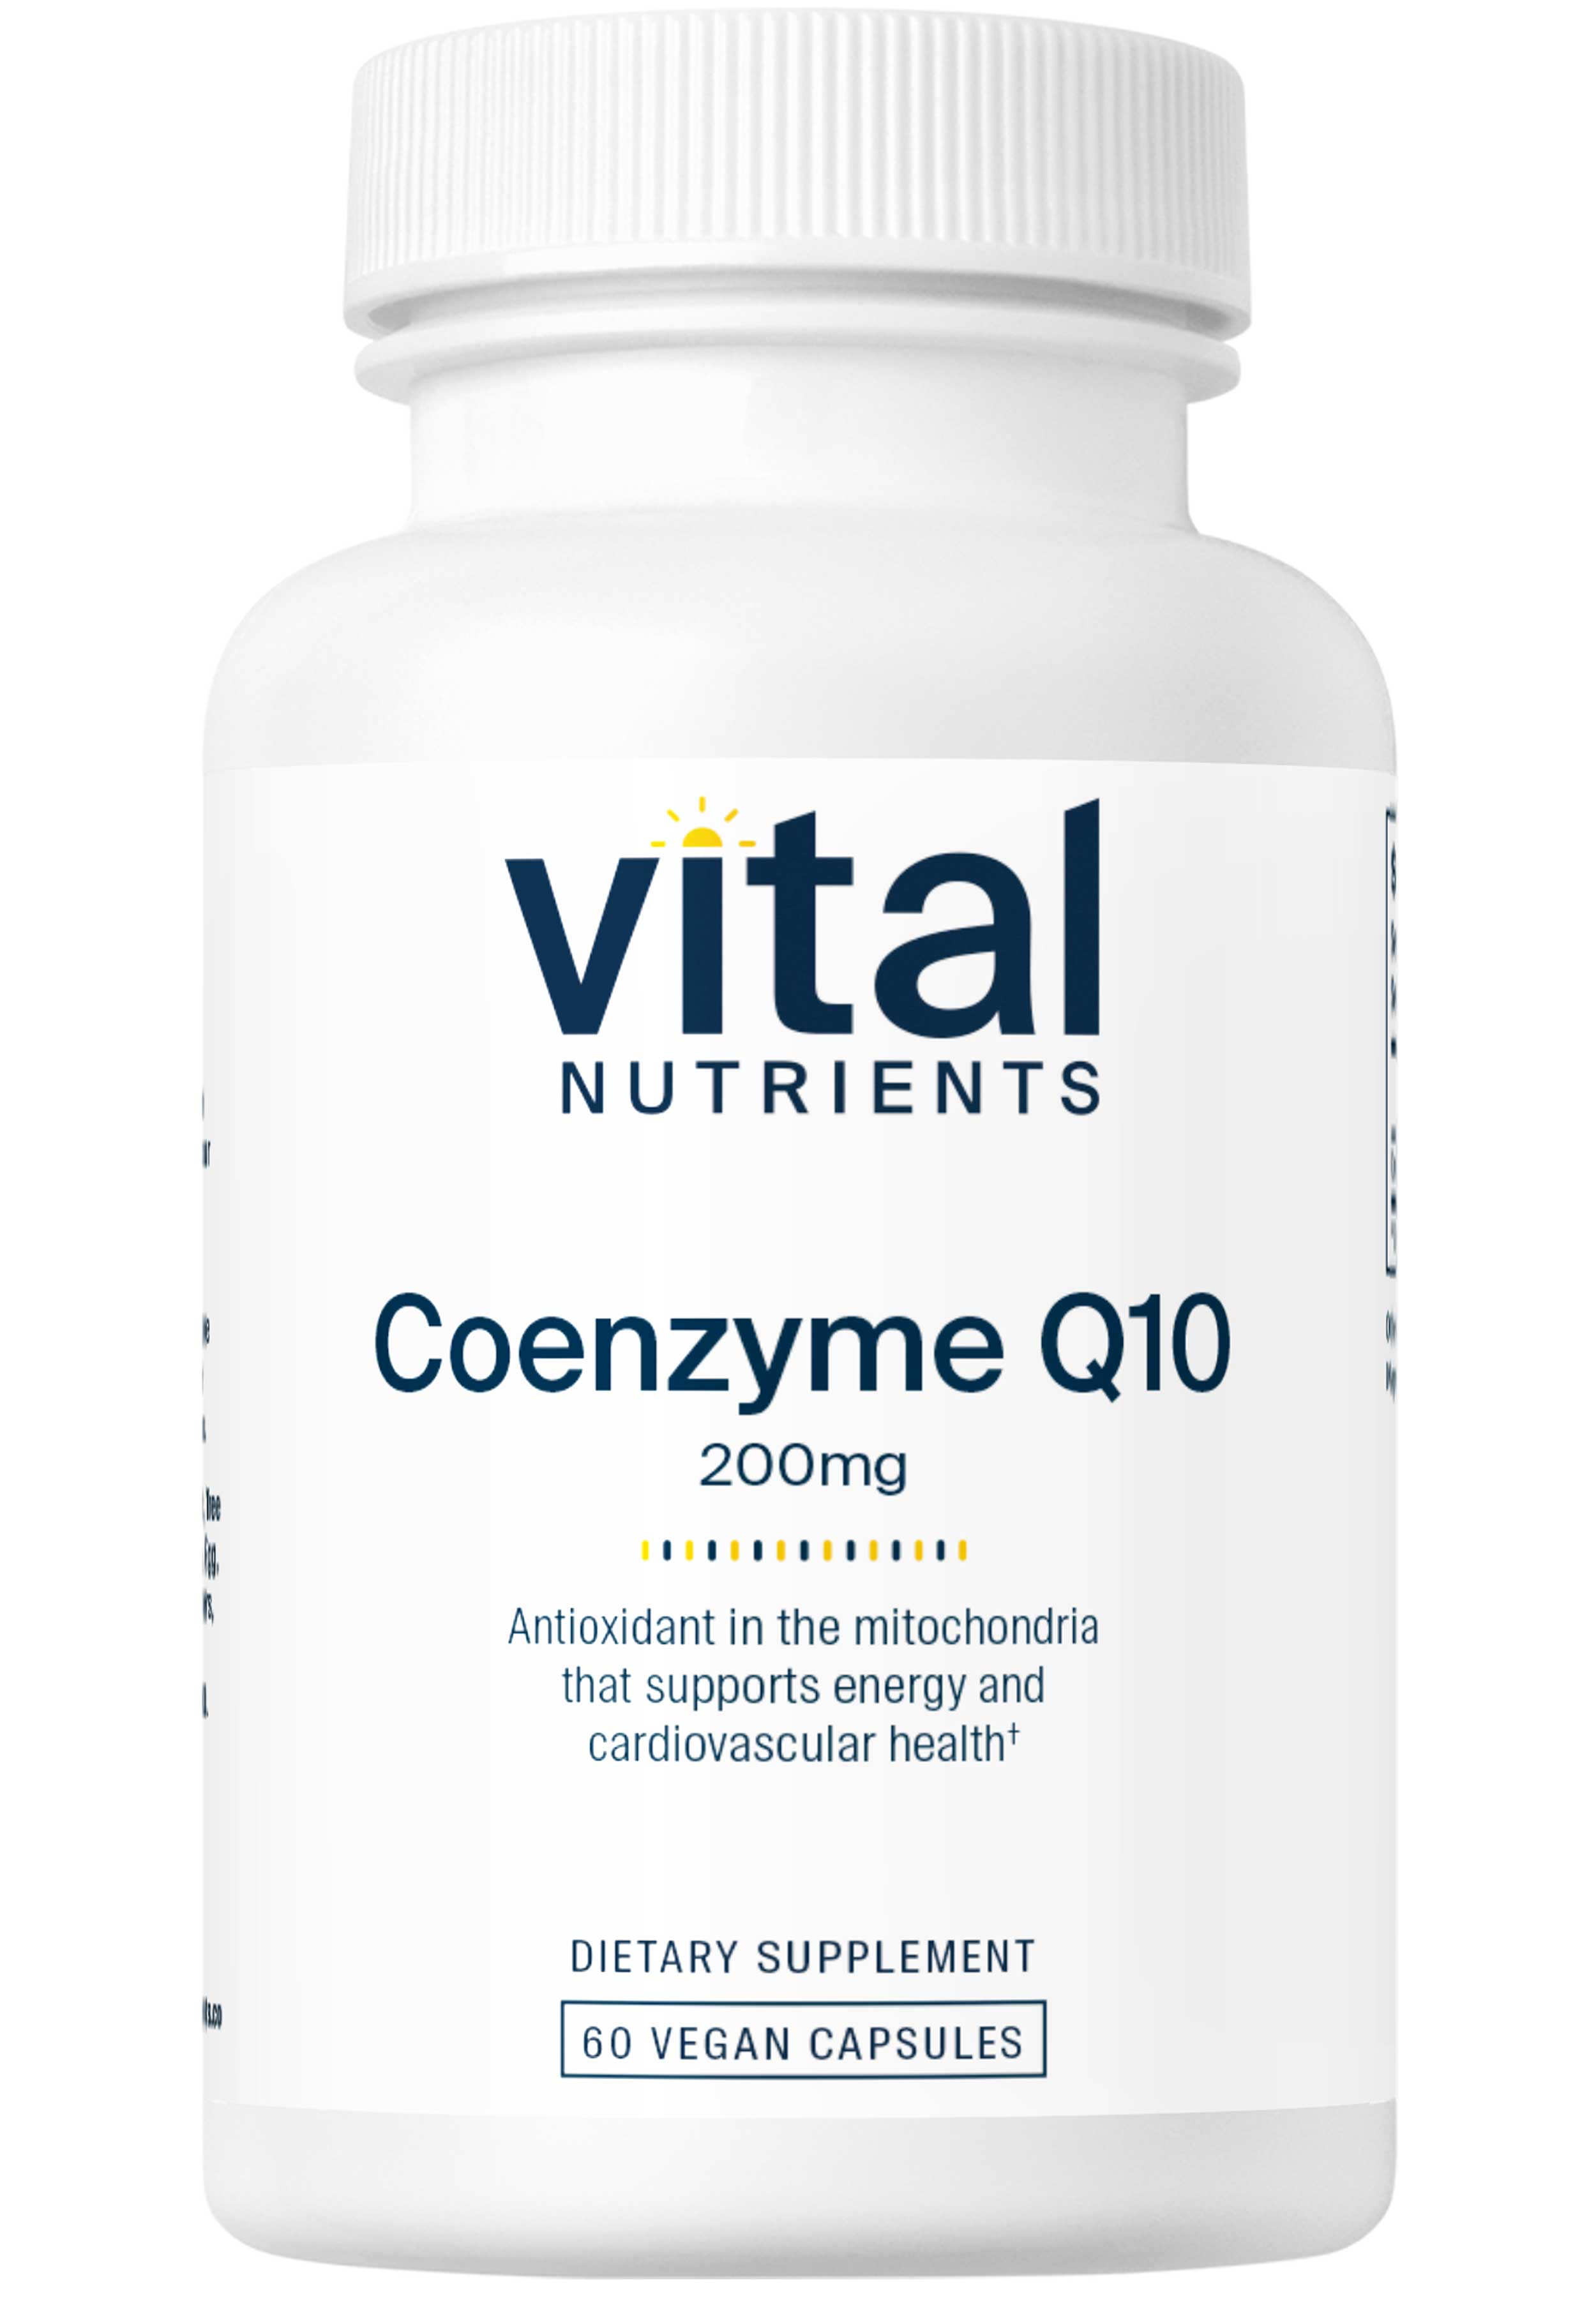 Vital Nutrients CoEnzyme Q10 200mg